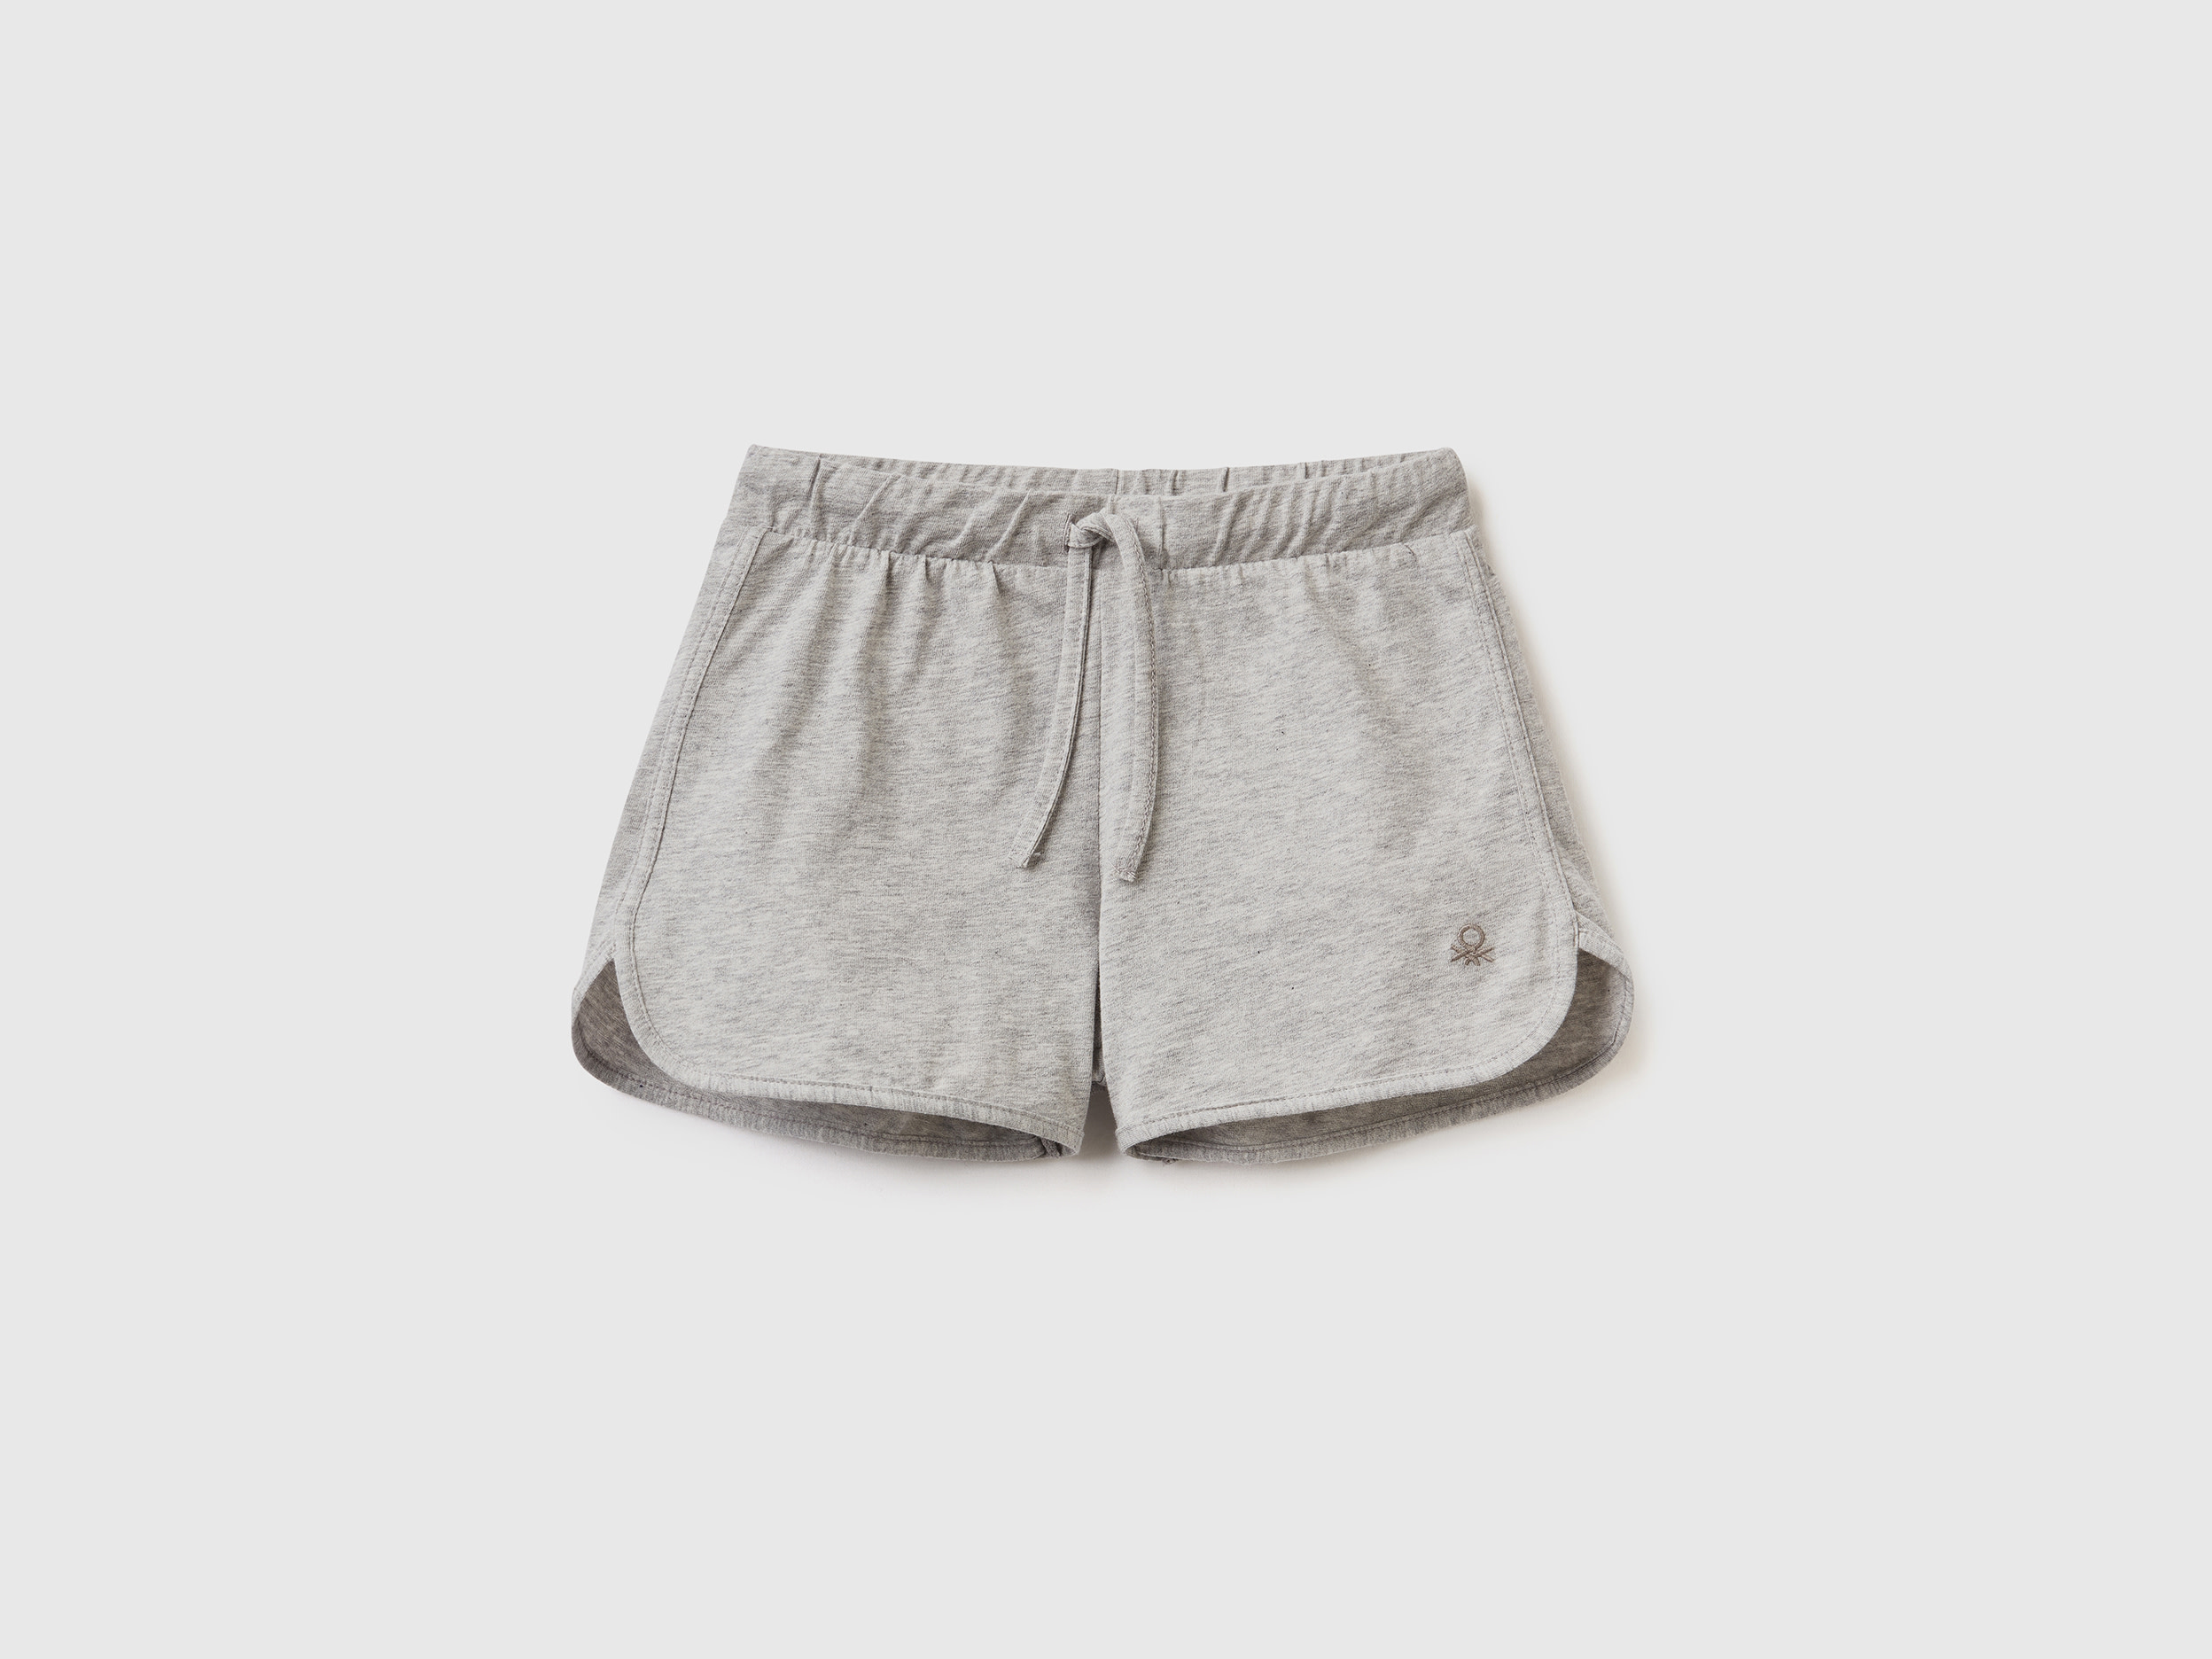 Image of Benetton, Runner Style Shorts In Organic Cotton, size 2XL, Light Gray, Kids